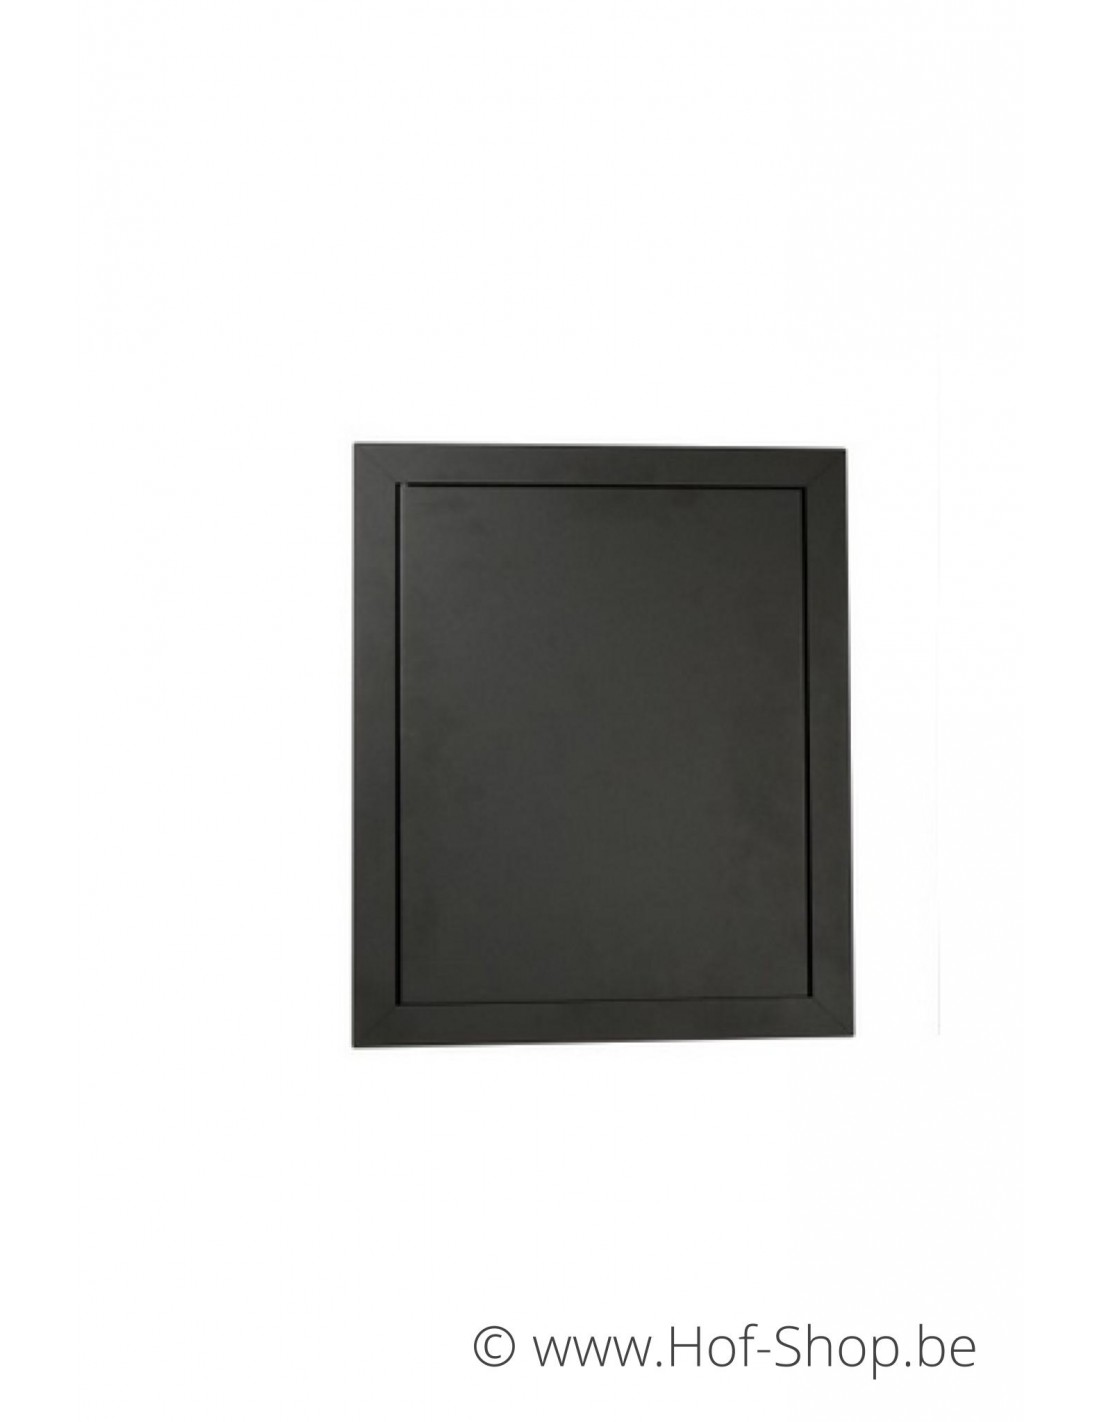 Brievenbusdeur 529/3 zwart 35,2 x 44,2 cm met elektrisch slot 'Connect' digital lock - Albo aluminium